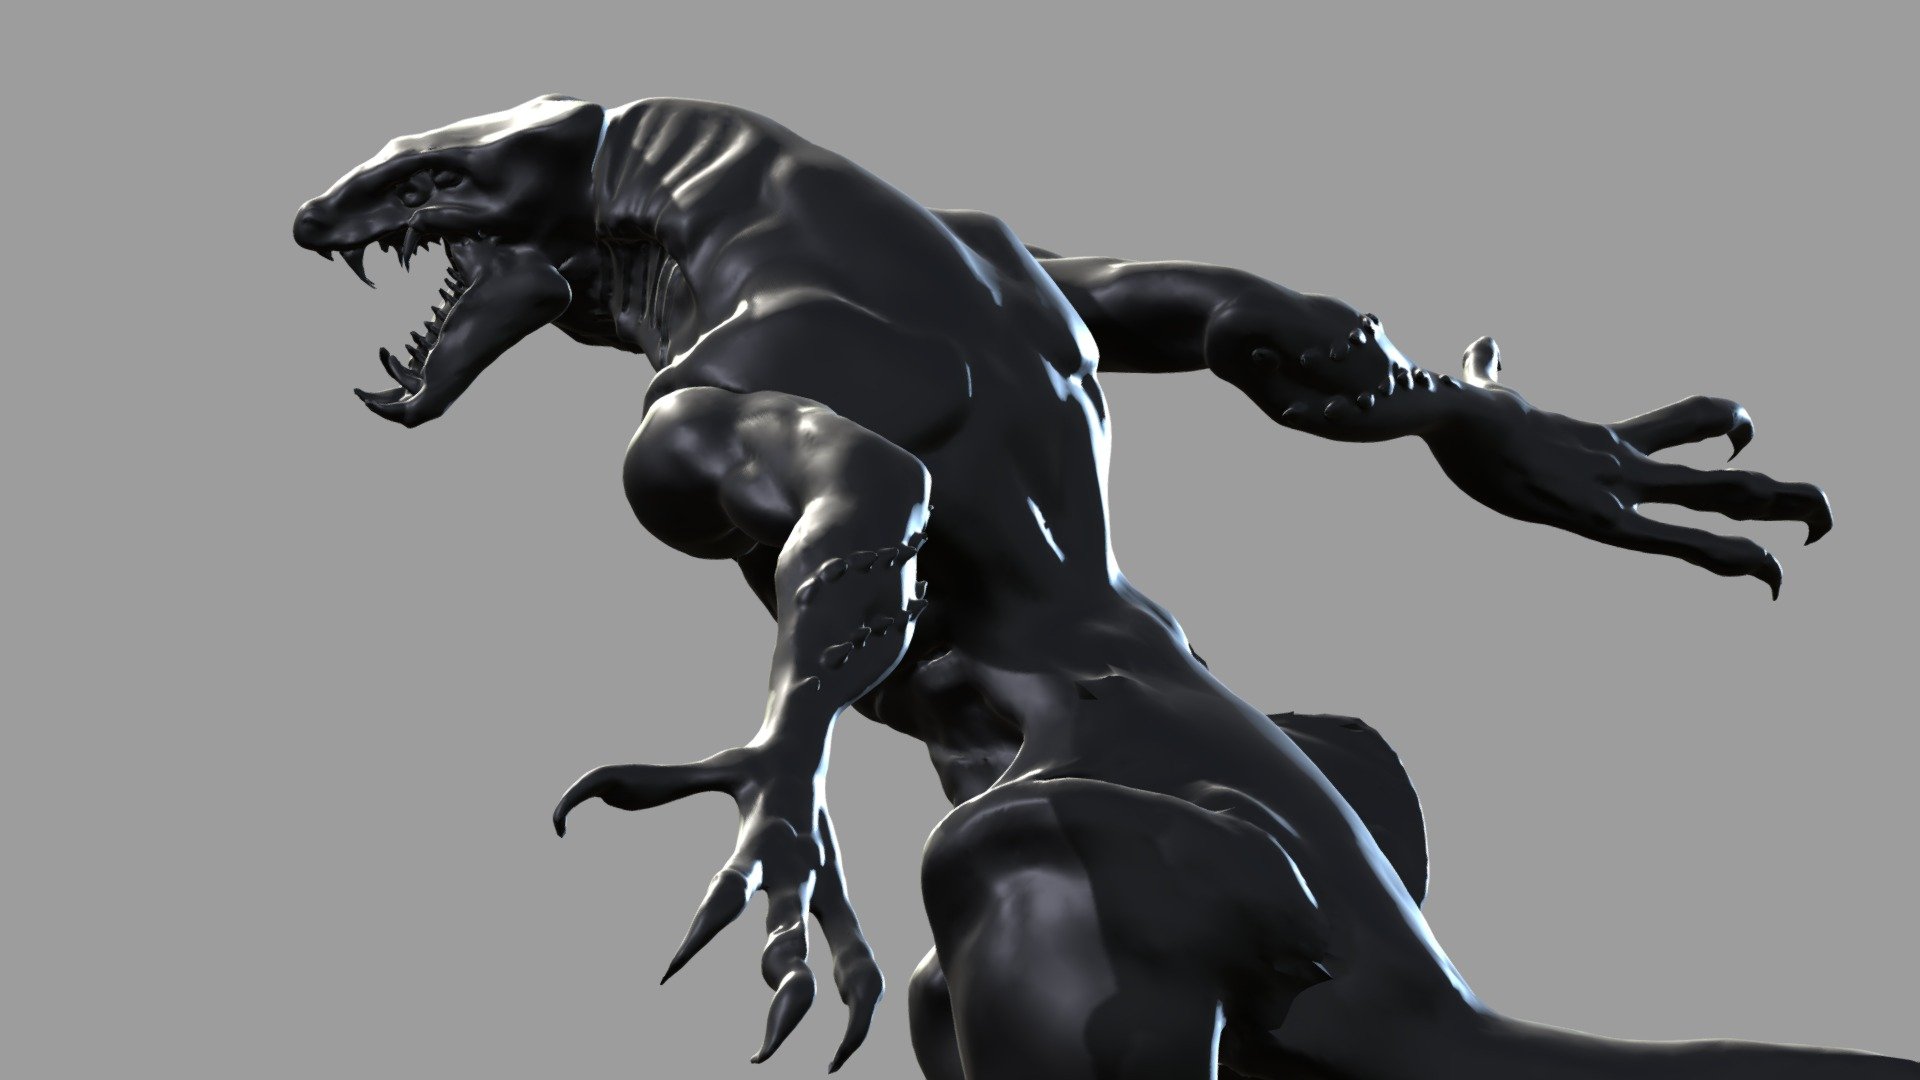 Alien Reptile man made in Sculptris 3d model